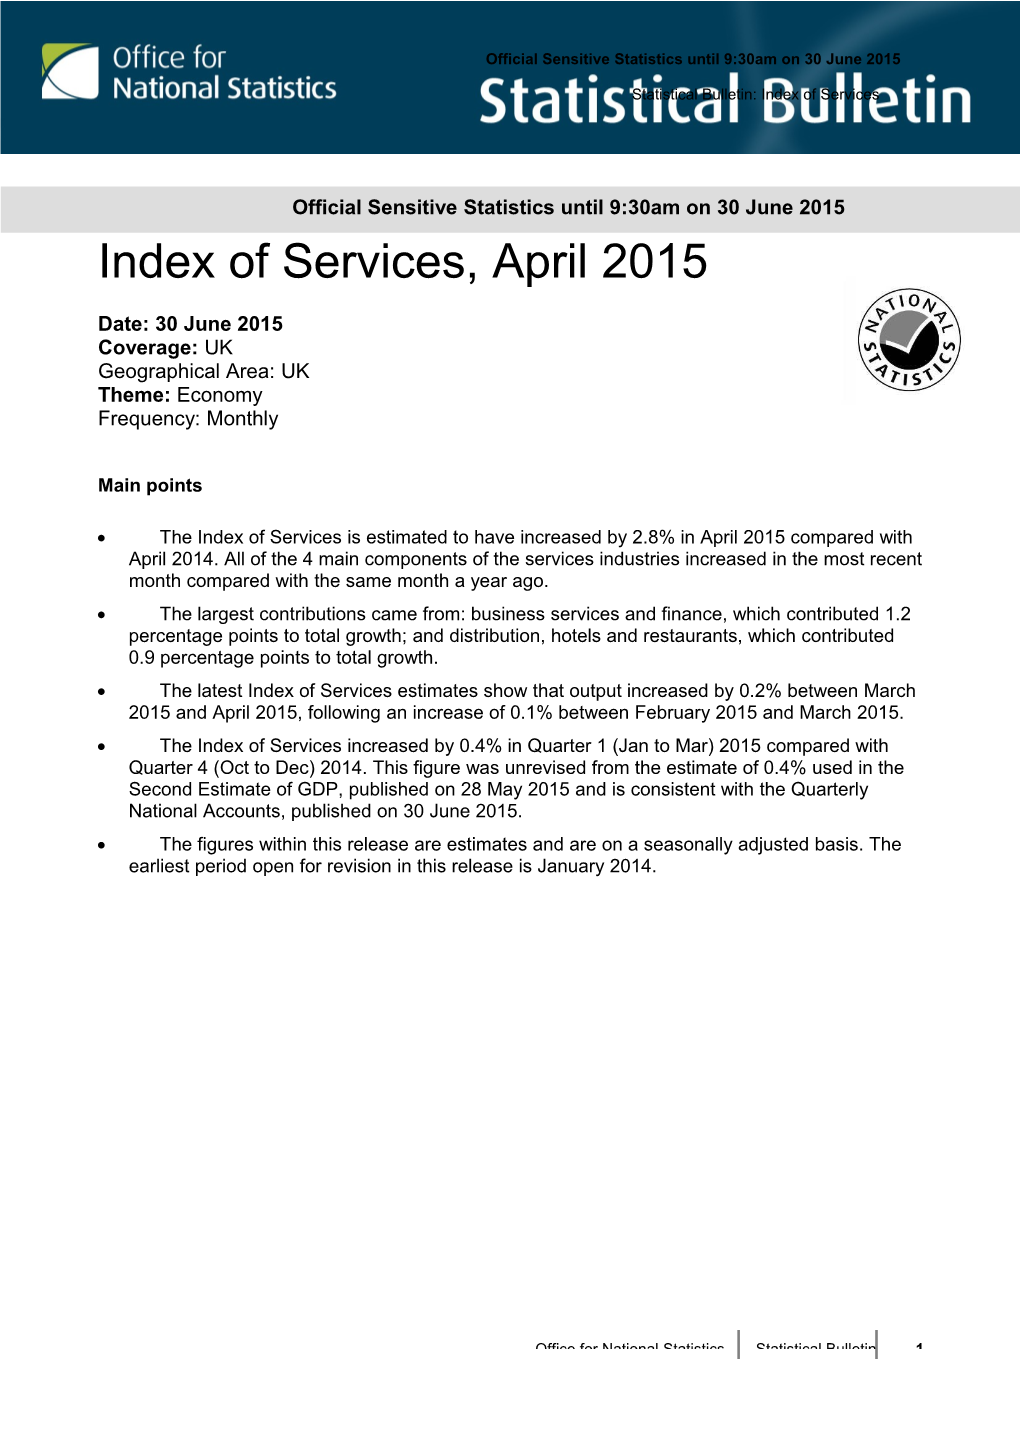 Official Sensitive Statistics Until 9:30Am on 30 June 2015